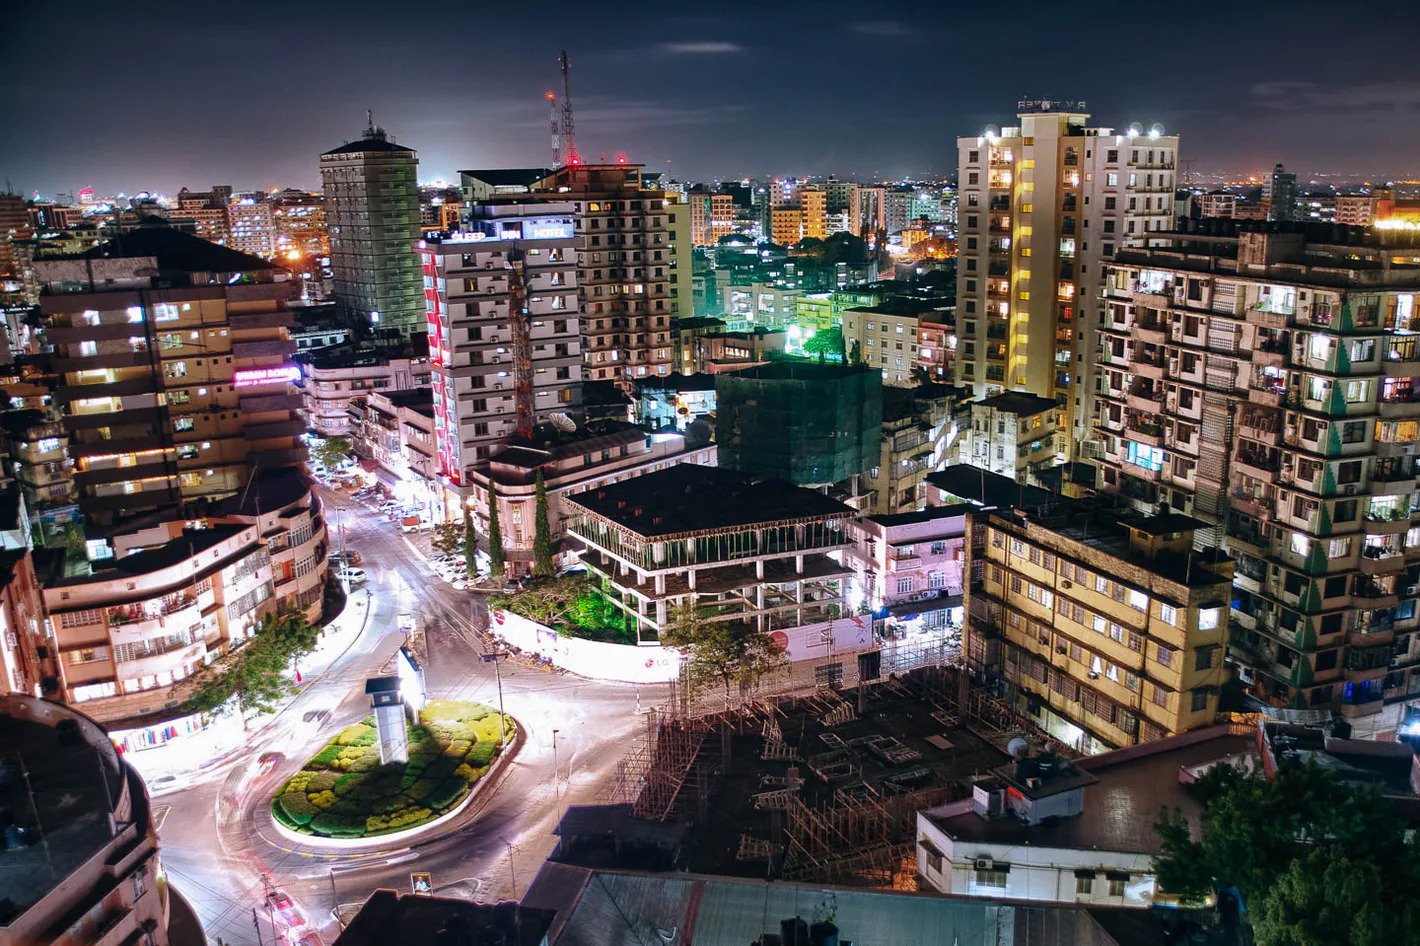 Dar es Salaam nightlife: some of the best night clubs in Dar es Salaam are found in downtown Dar